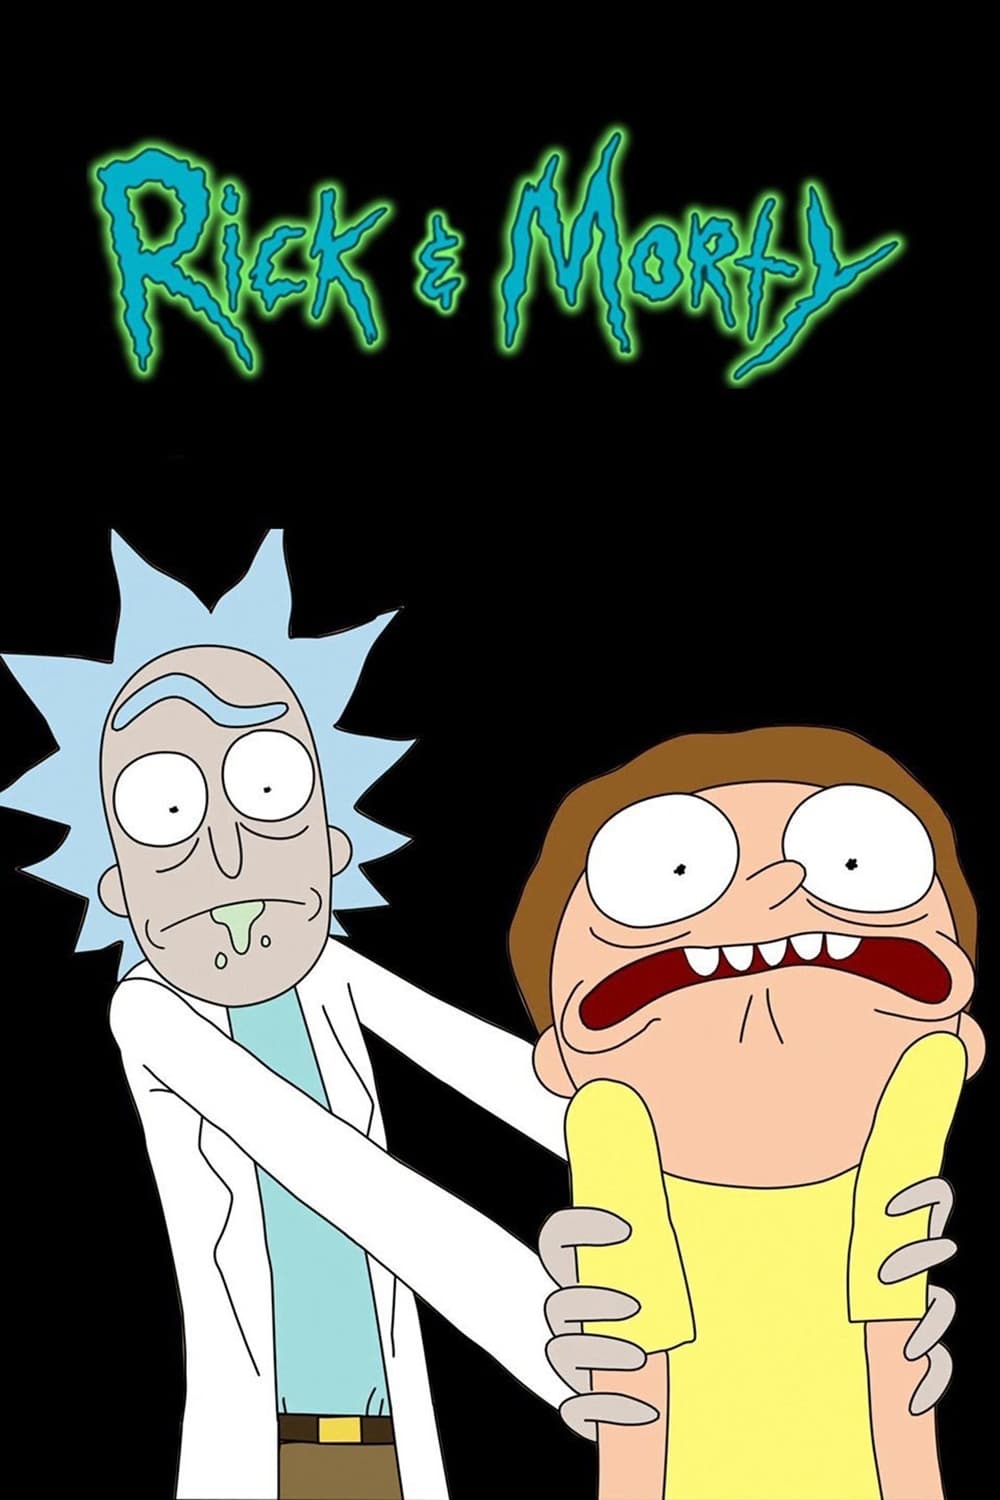 Rick & Morty S2